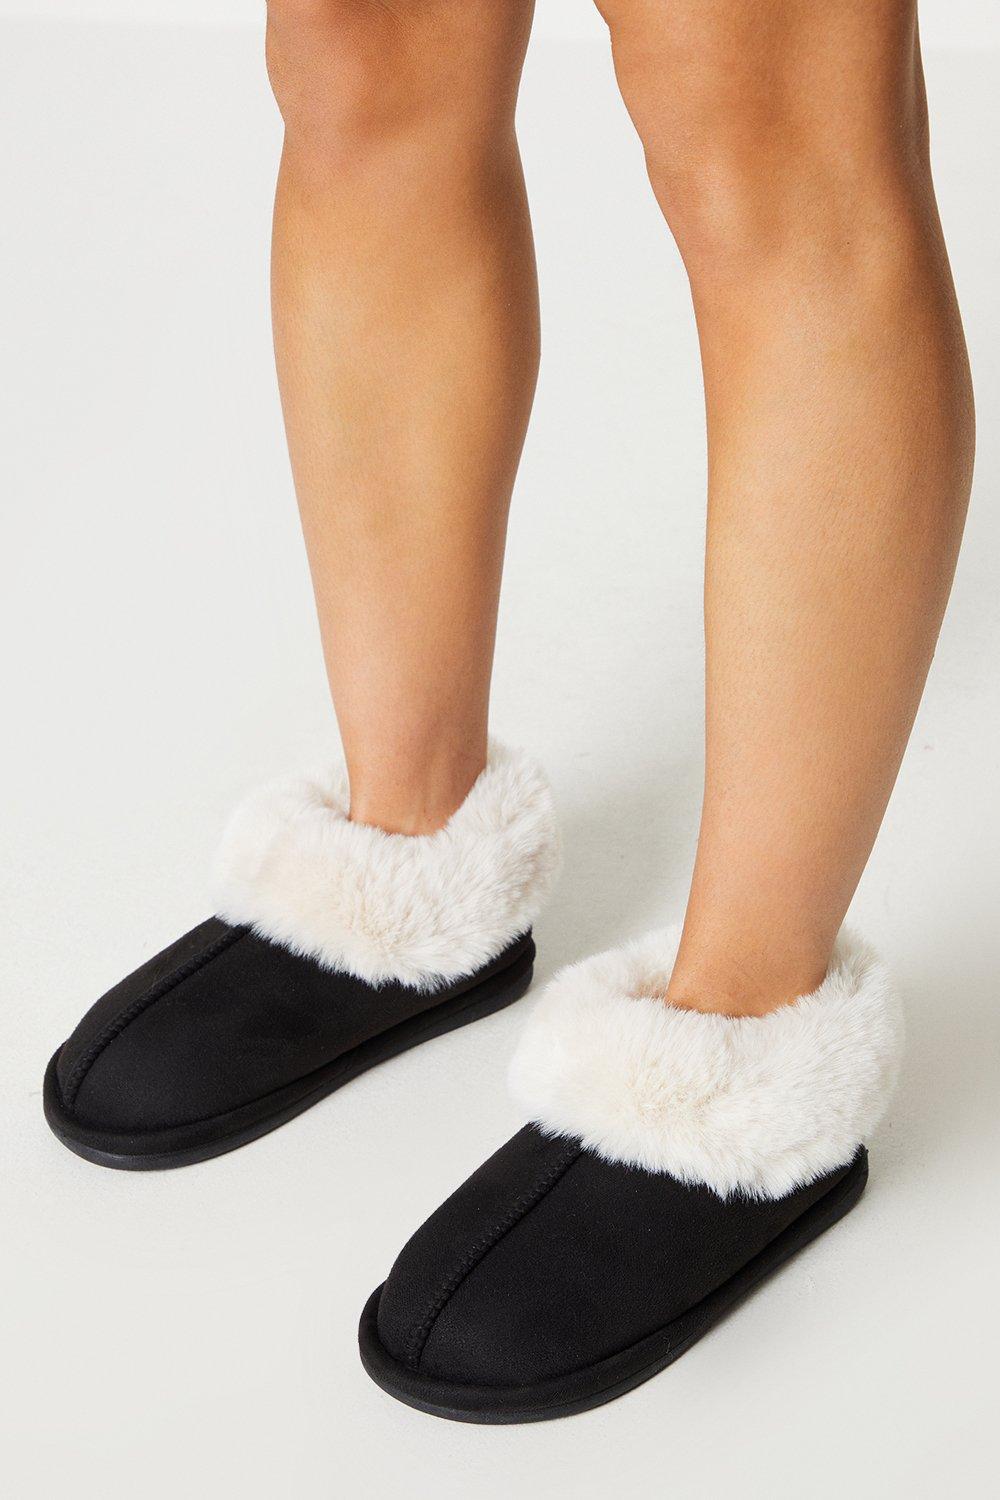 Women’s Maggi Faux Fur Sheepskin Fur Bootie Slippers - natural black - 7